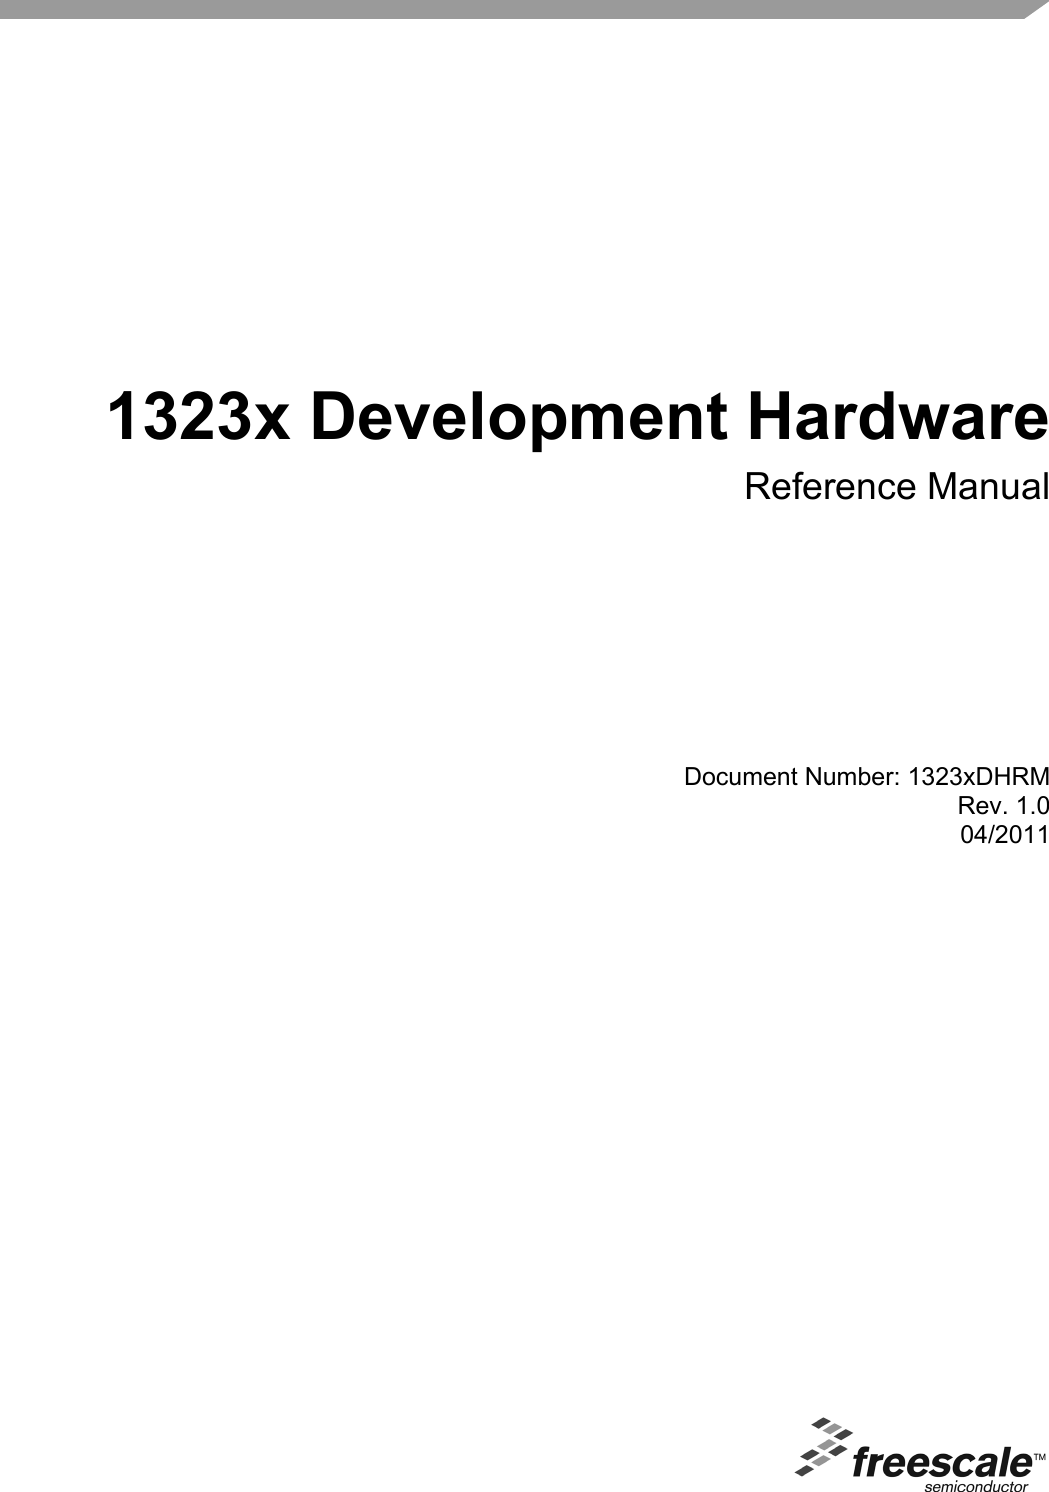 Document Number: 1323xDHRMRev. 1.004/2011 1323x Development HardwareReference Manual